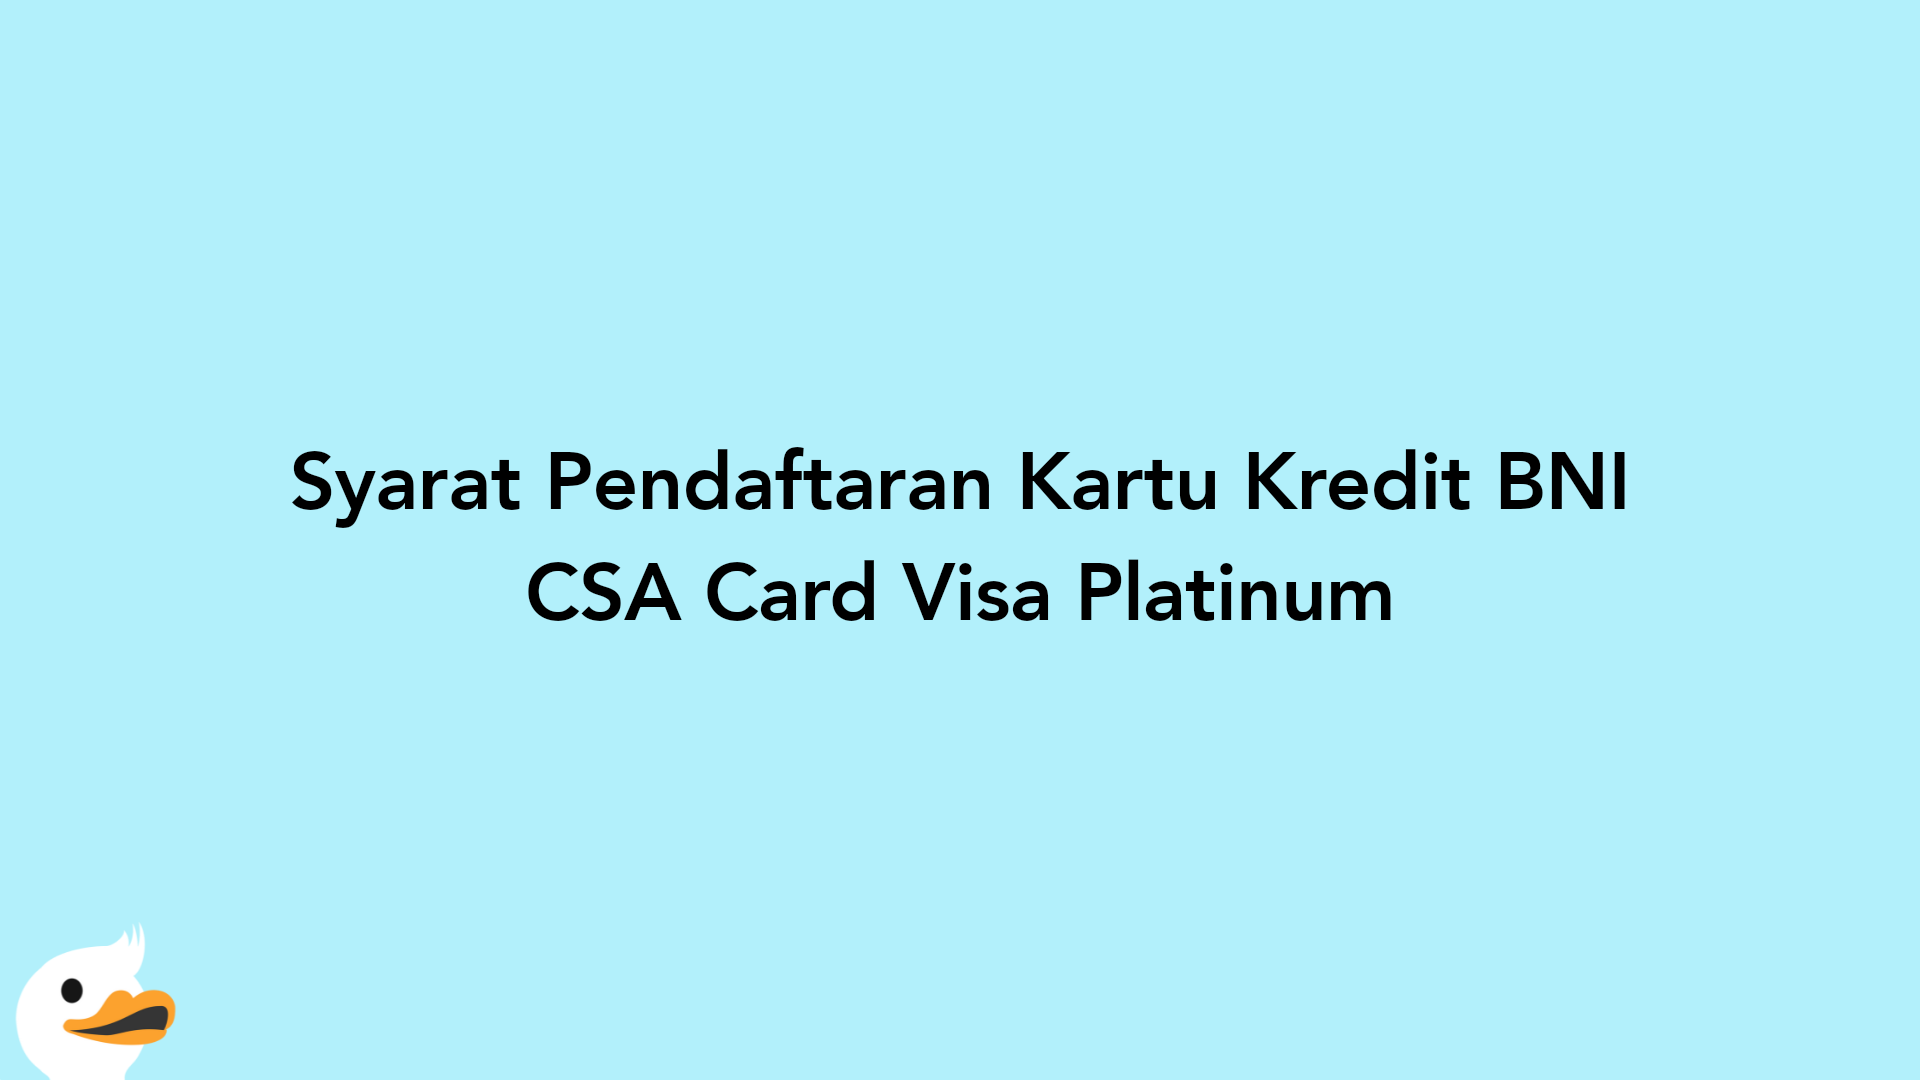 Syarat Pendaftaran Kartu Kredit BNI CSA Card Visa Platinum